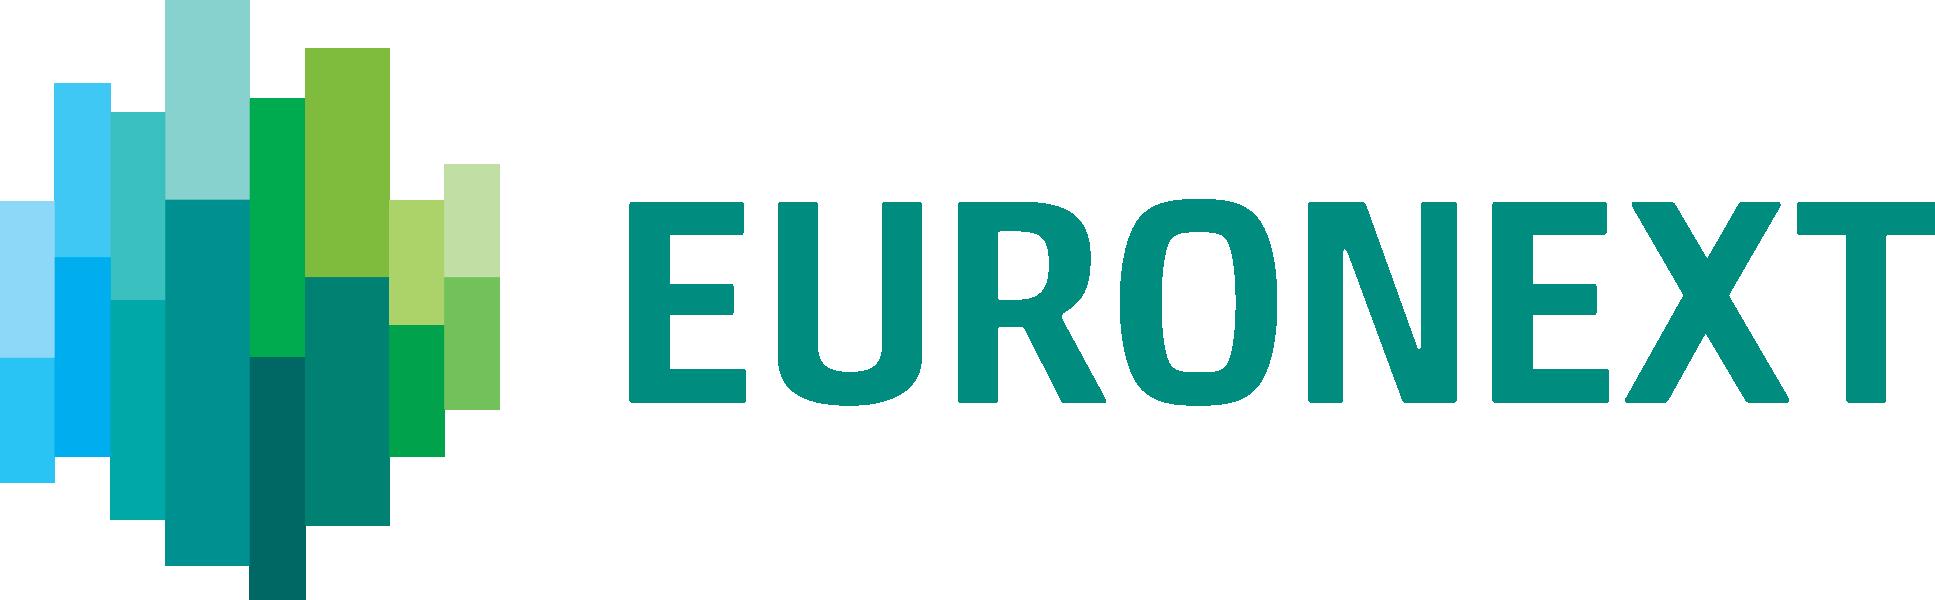 File:Euronext emblem.svg